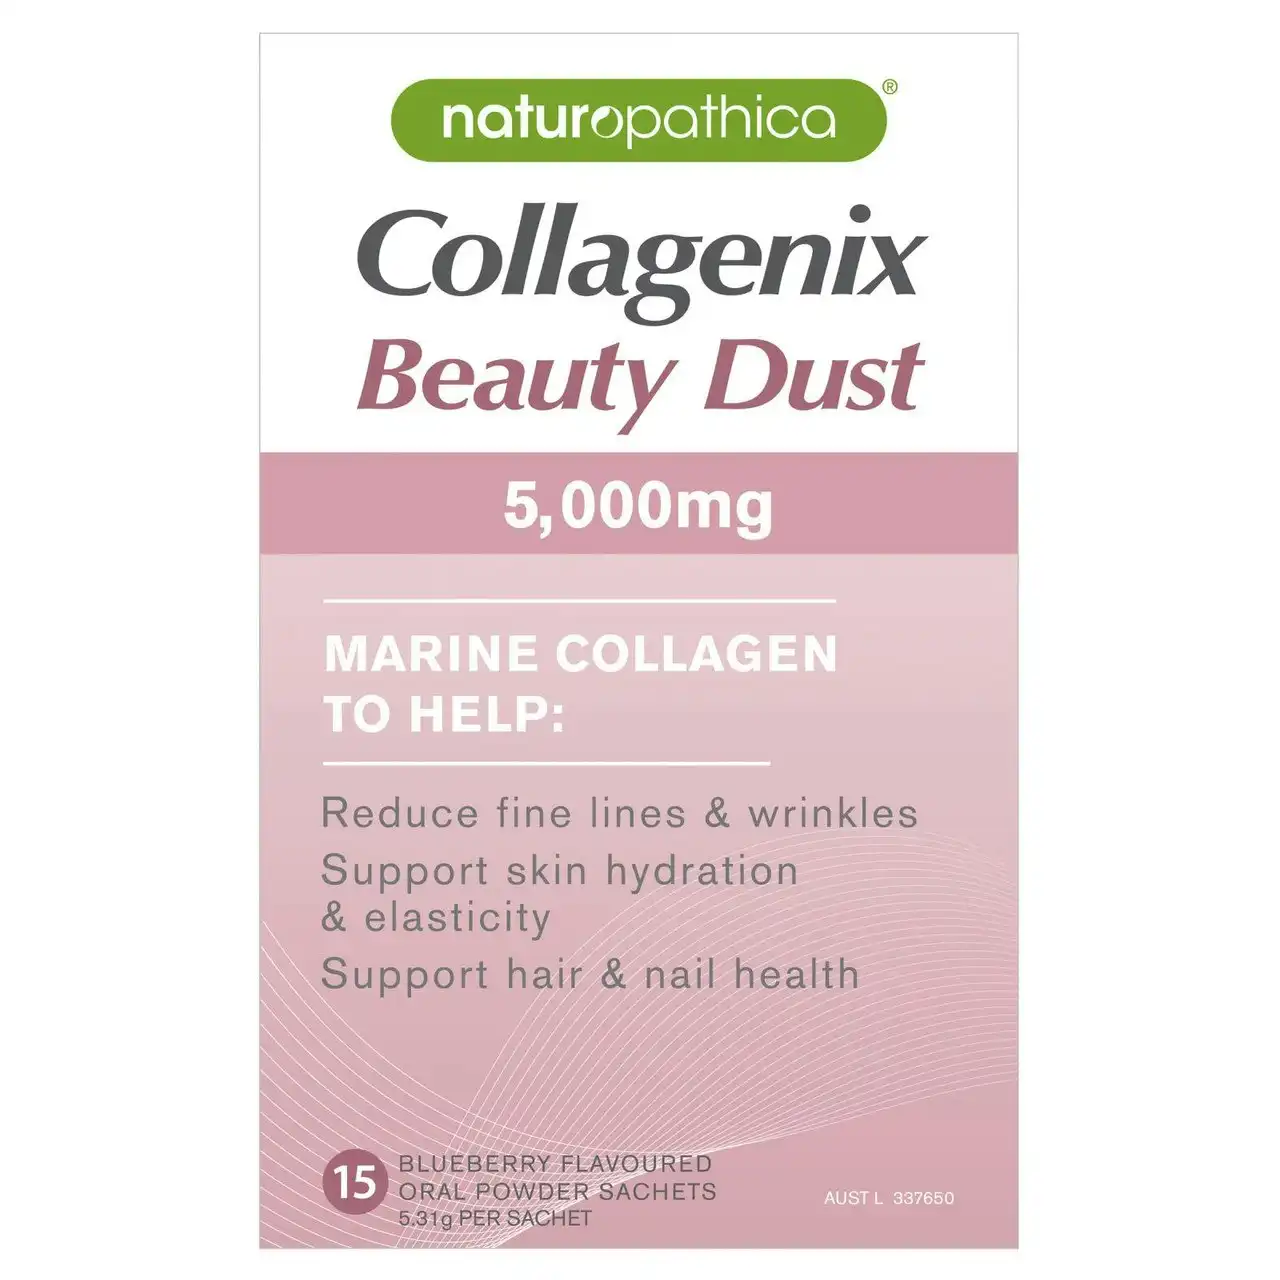 Naturopathica Collagenix Beauty Dust 5,000mg 15 Sachets